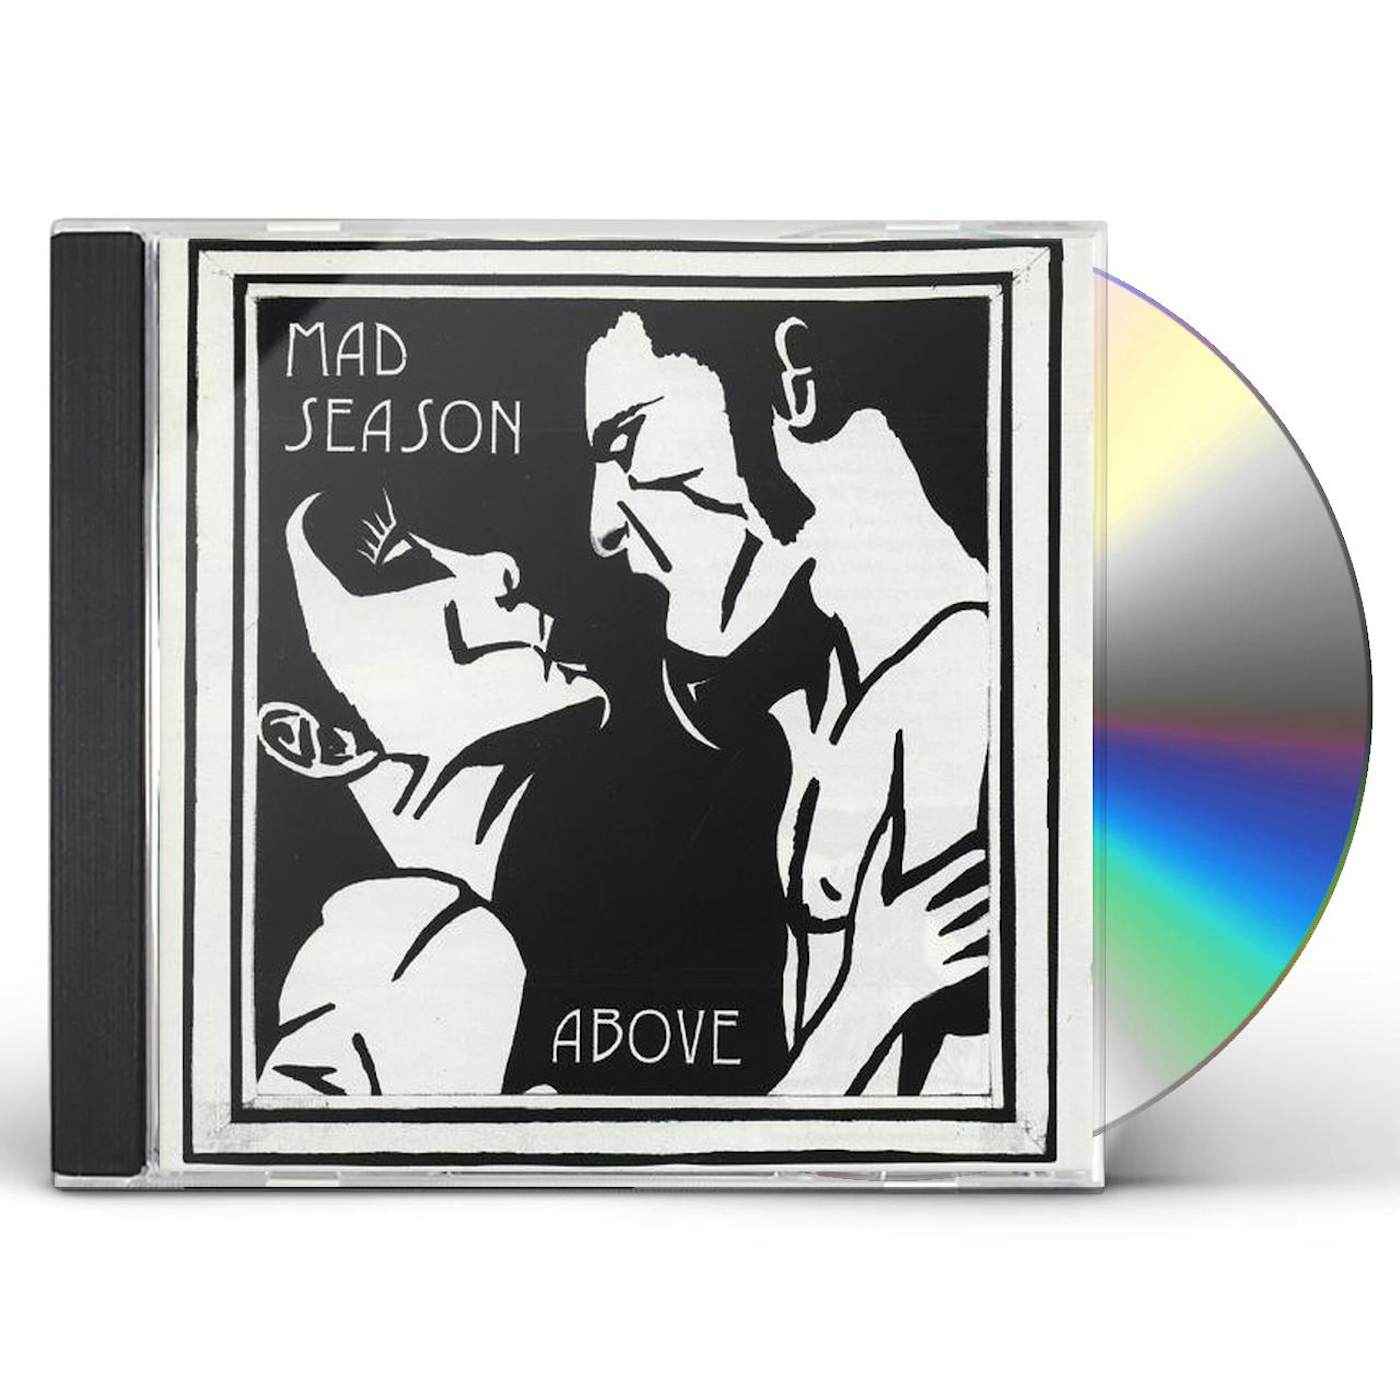 Mad Season ABOVE CD